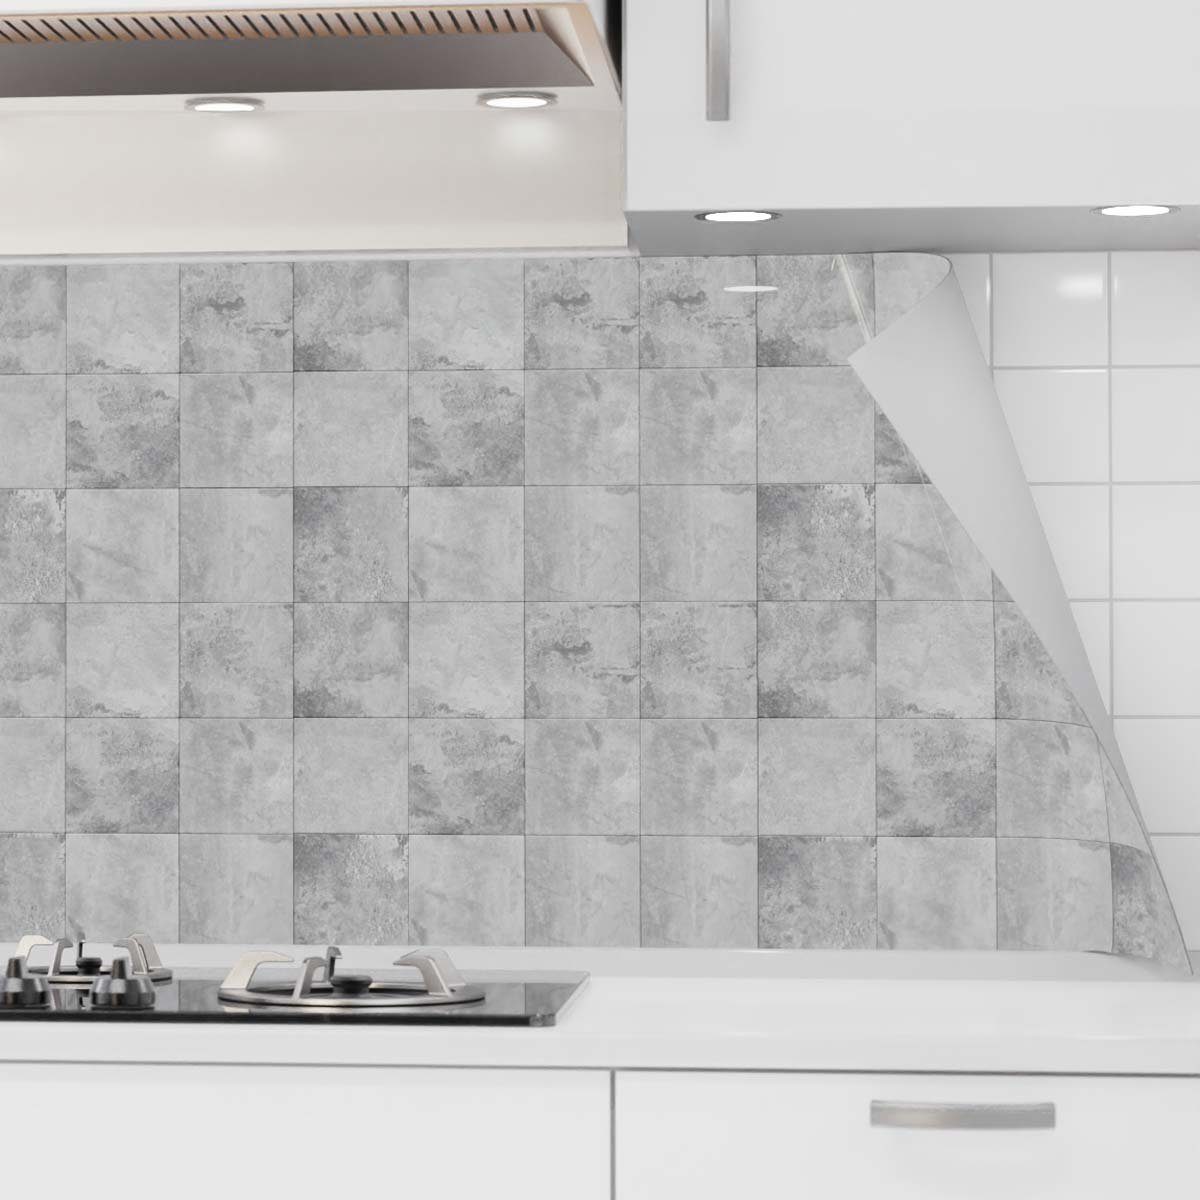 versteifte - Küche - PET Folie grau Keramikfliesen Küchenrückwand selbstklebend Matt danario Spritzschutz -